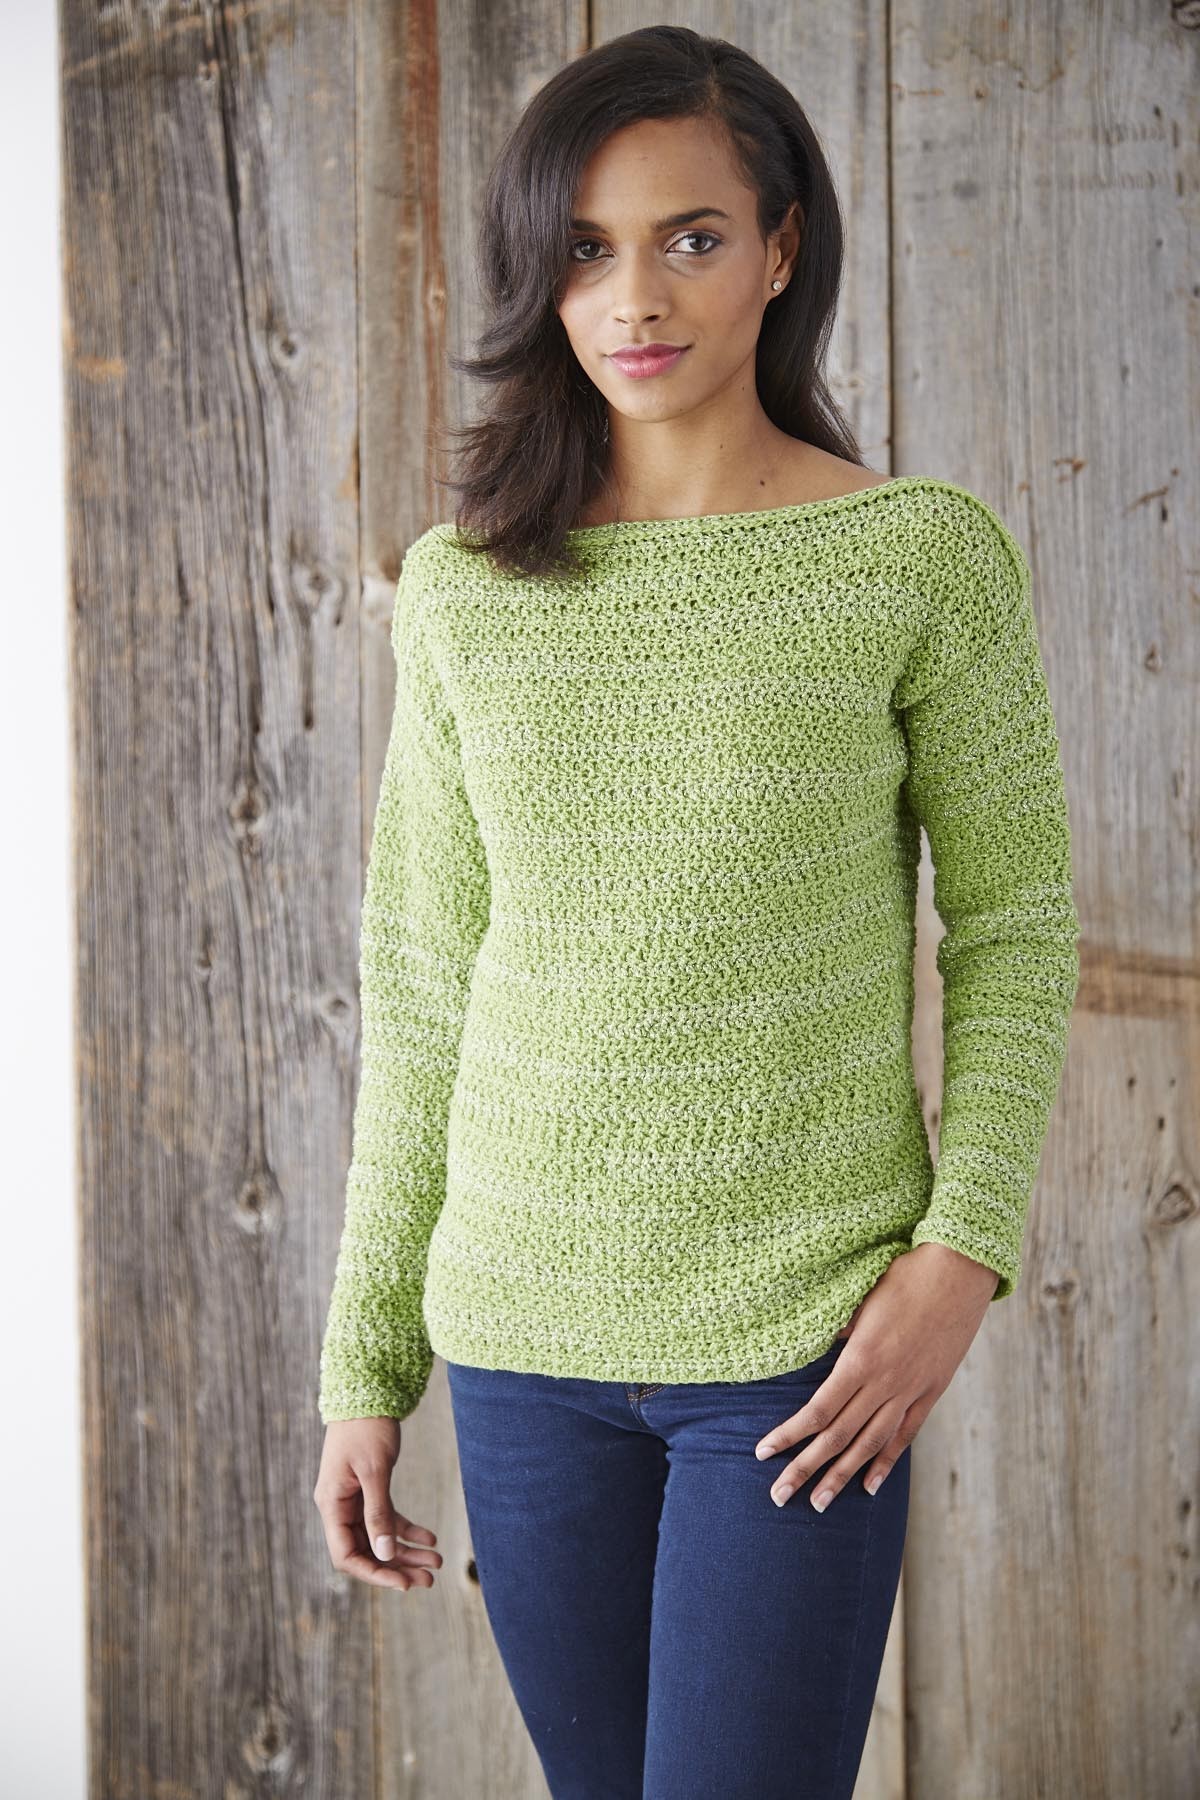 crochet sweater patterns slouchy crochet cardigan. boat neck pullover gjihelm